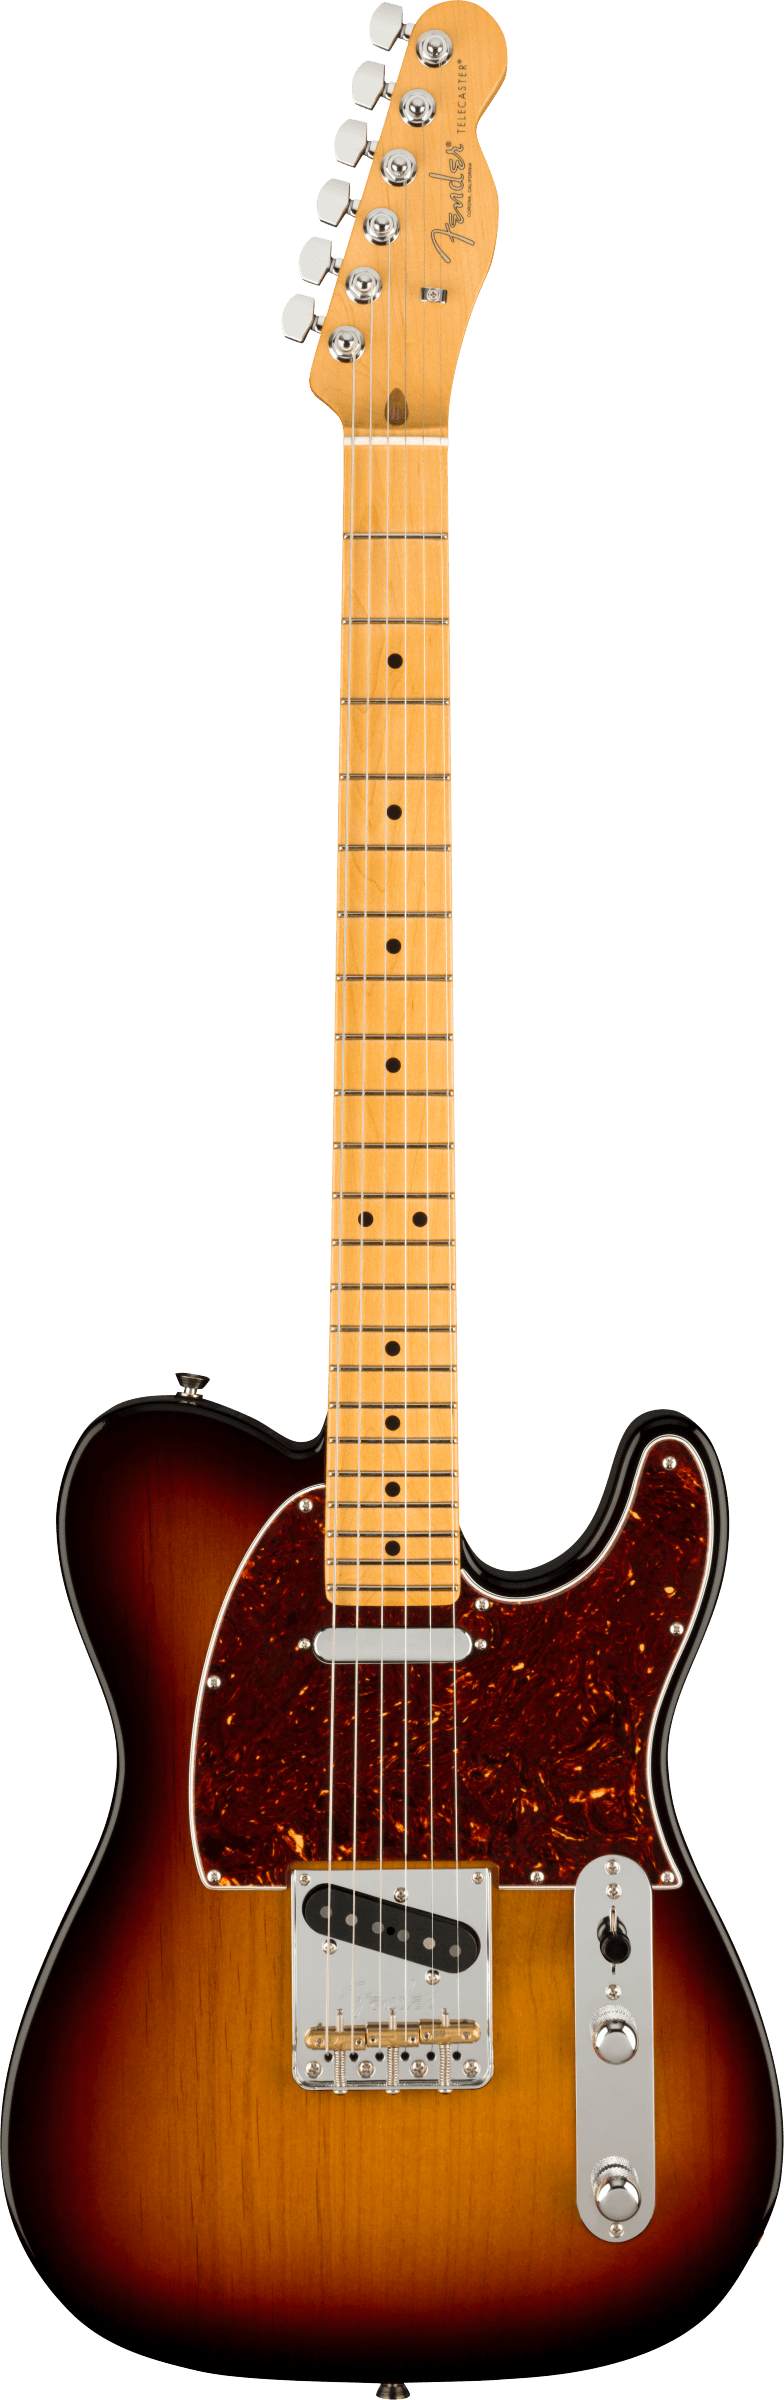 Fender Telecaster electric guitar in 3 Color Sunburst Tone Shop Guitars DFW